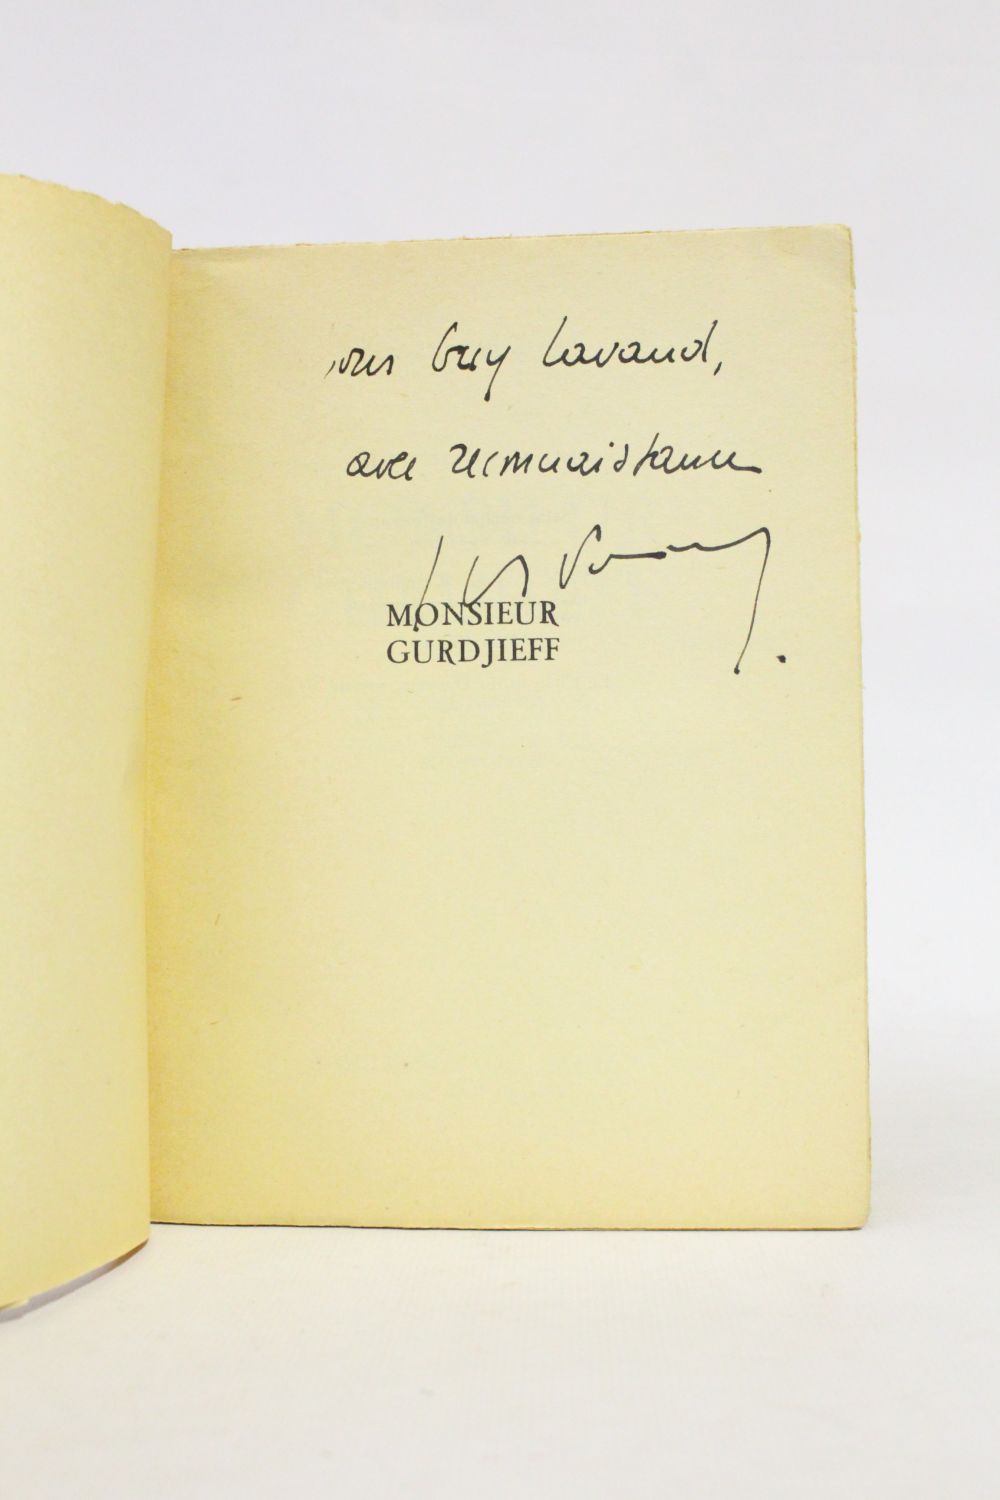 PAUWELS : Monsieur Gurdjieff - Libro autografato, Prima edizione